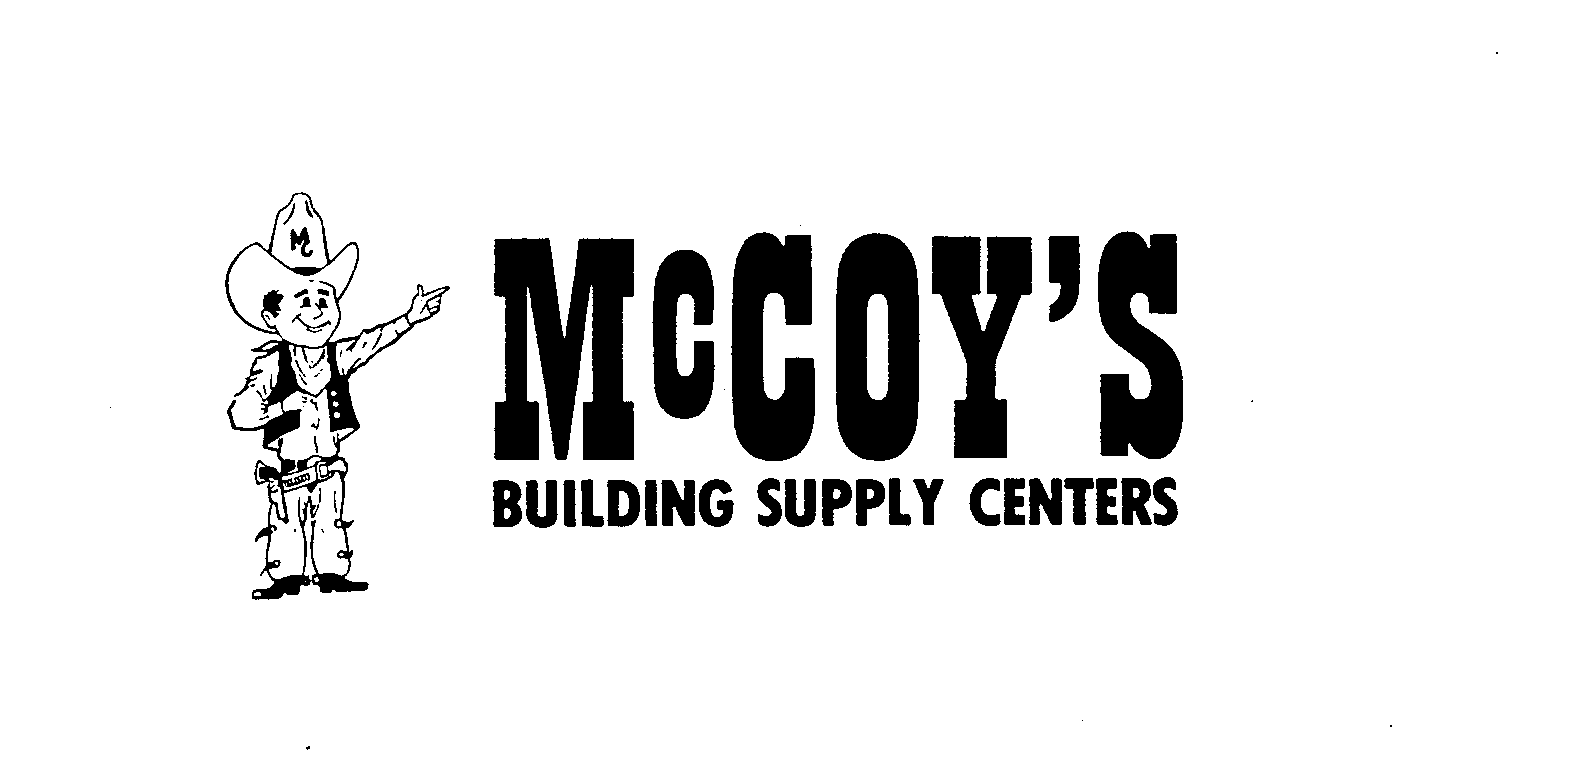  MC MCCOY'S BUILDING SUPPLY CENTERS